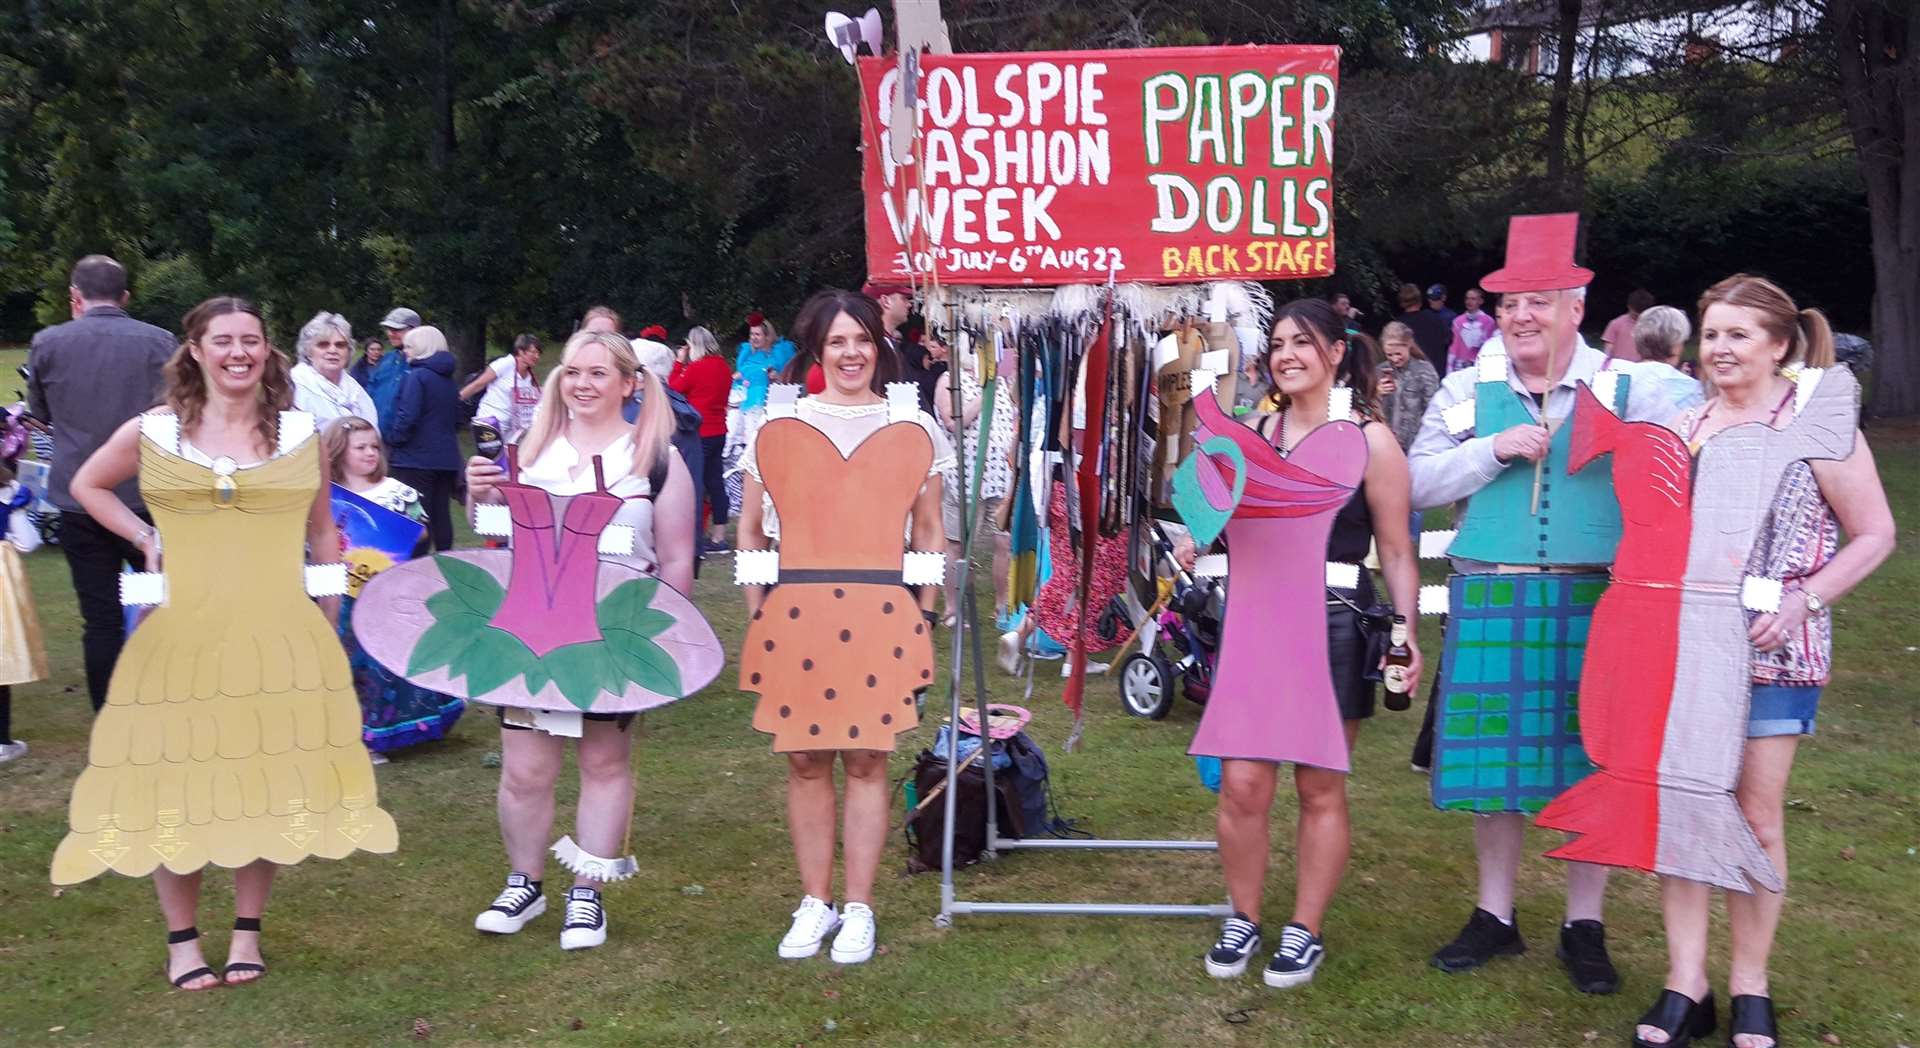 Paper Dolls won a prize for most original senior group.